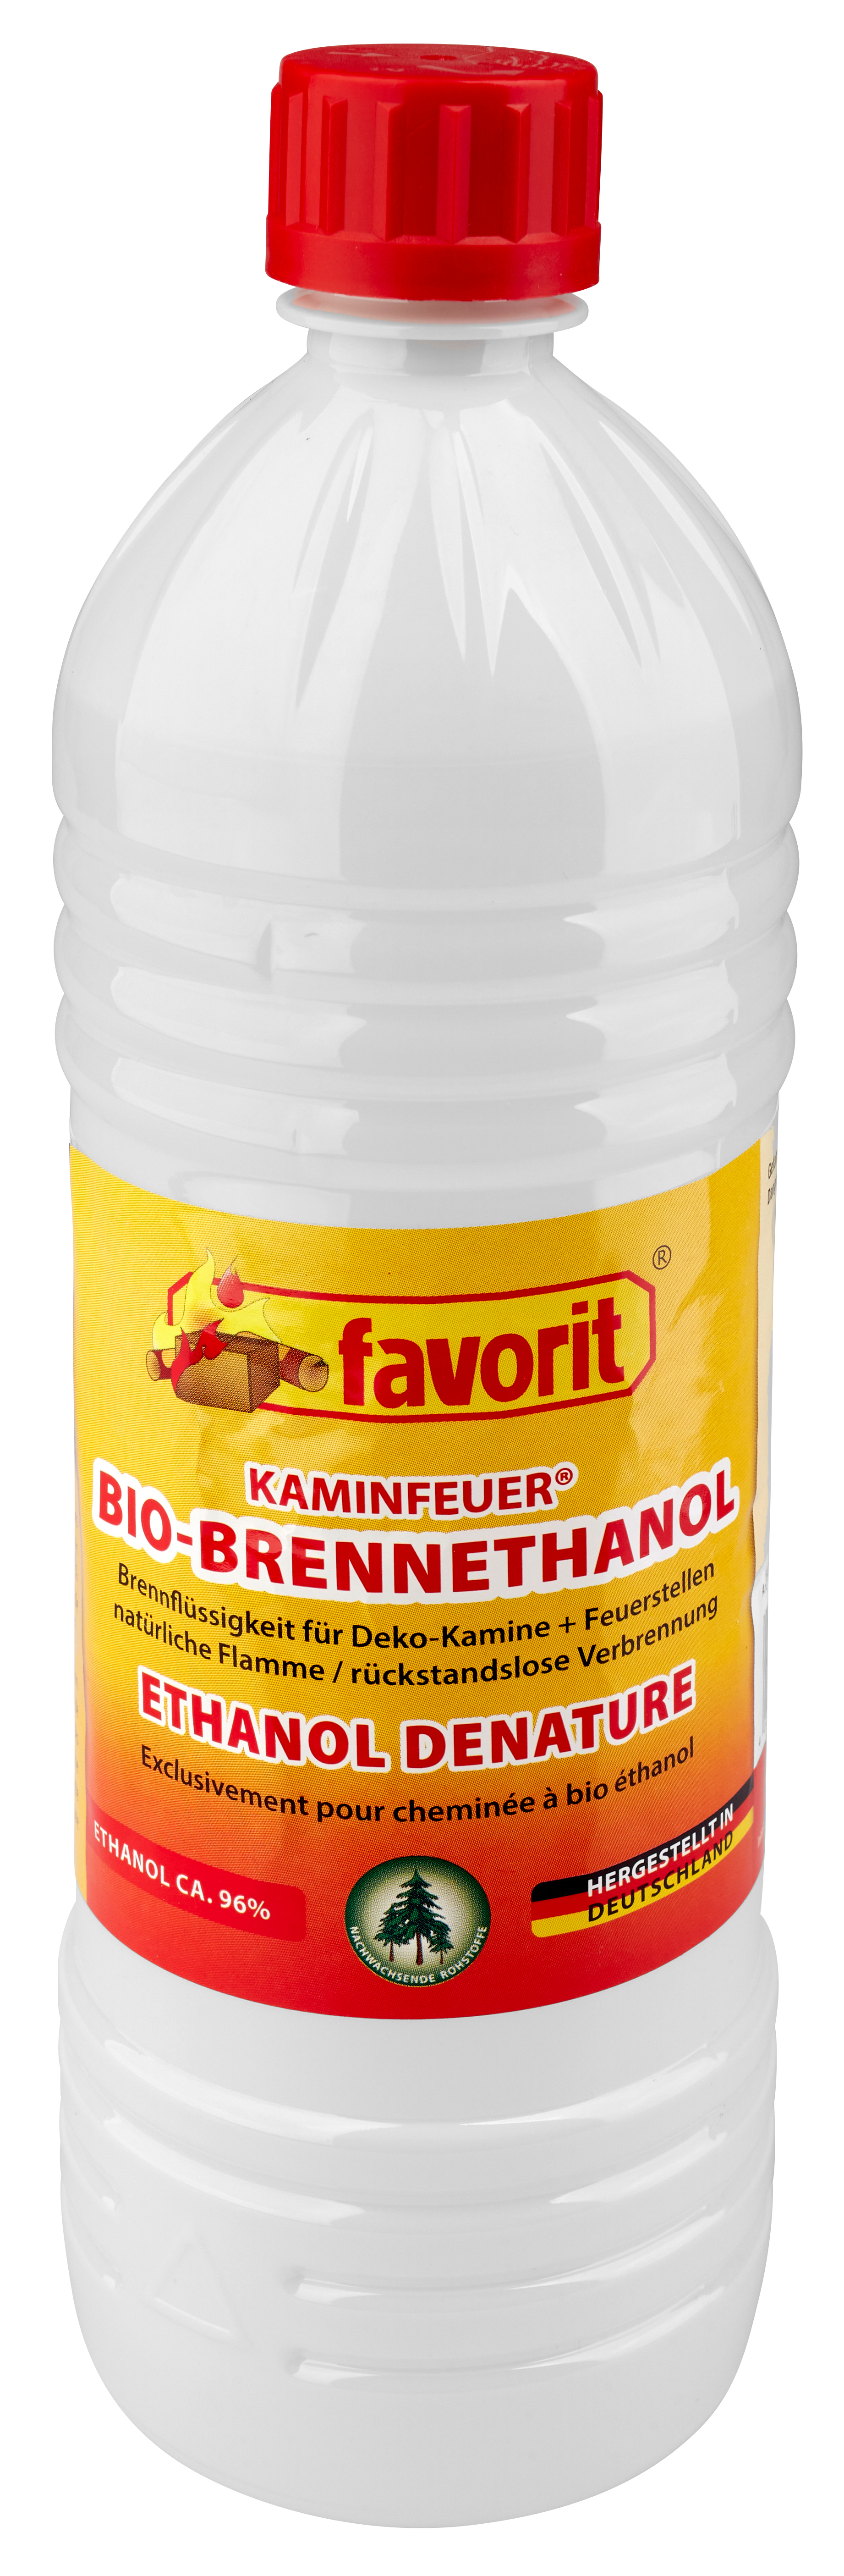 favorit Bio Brennethanol